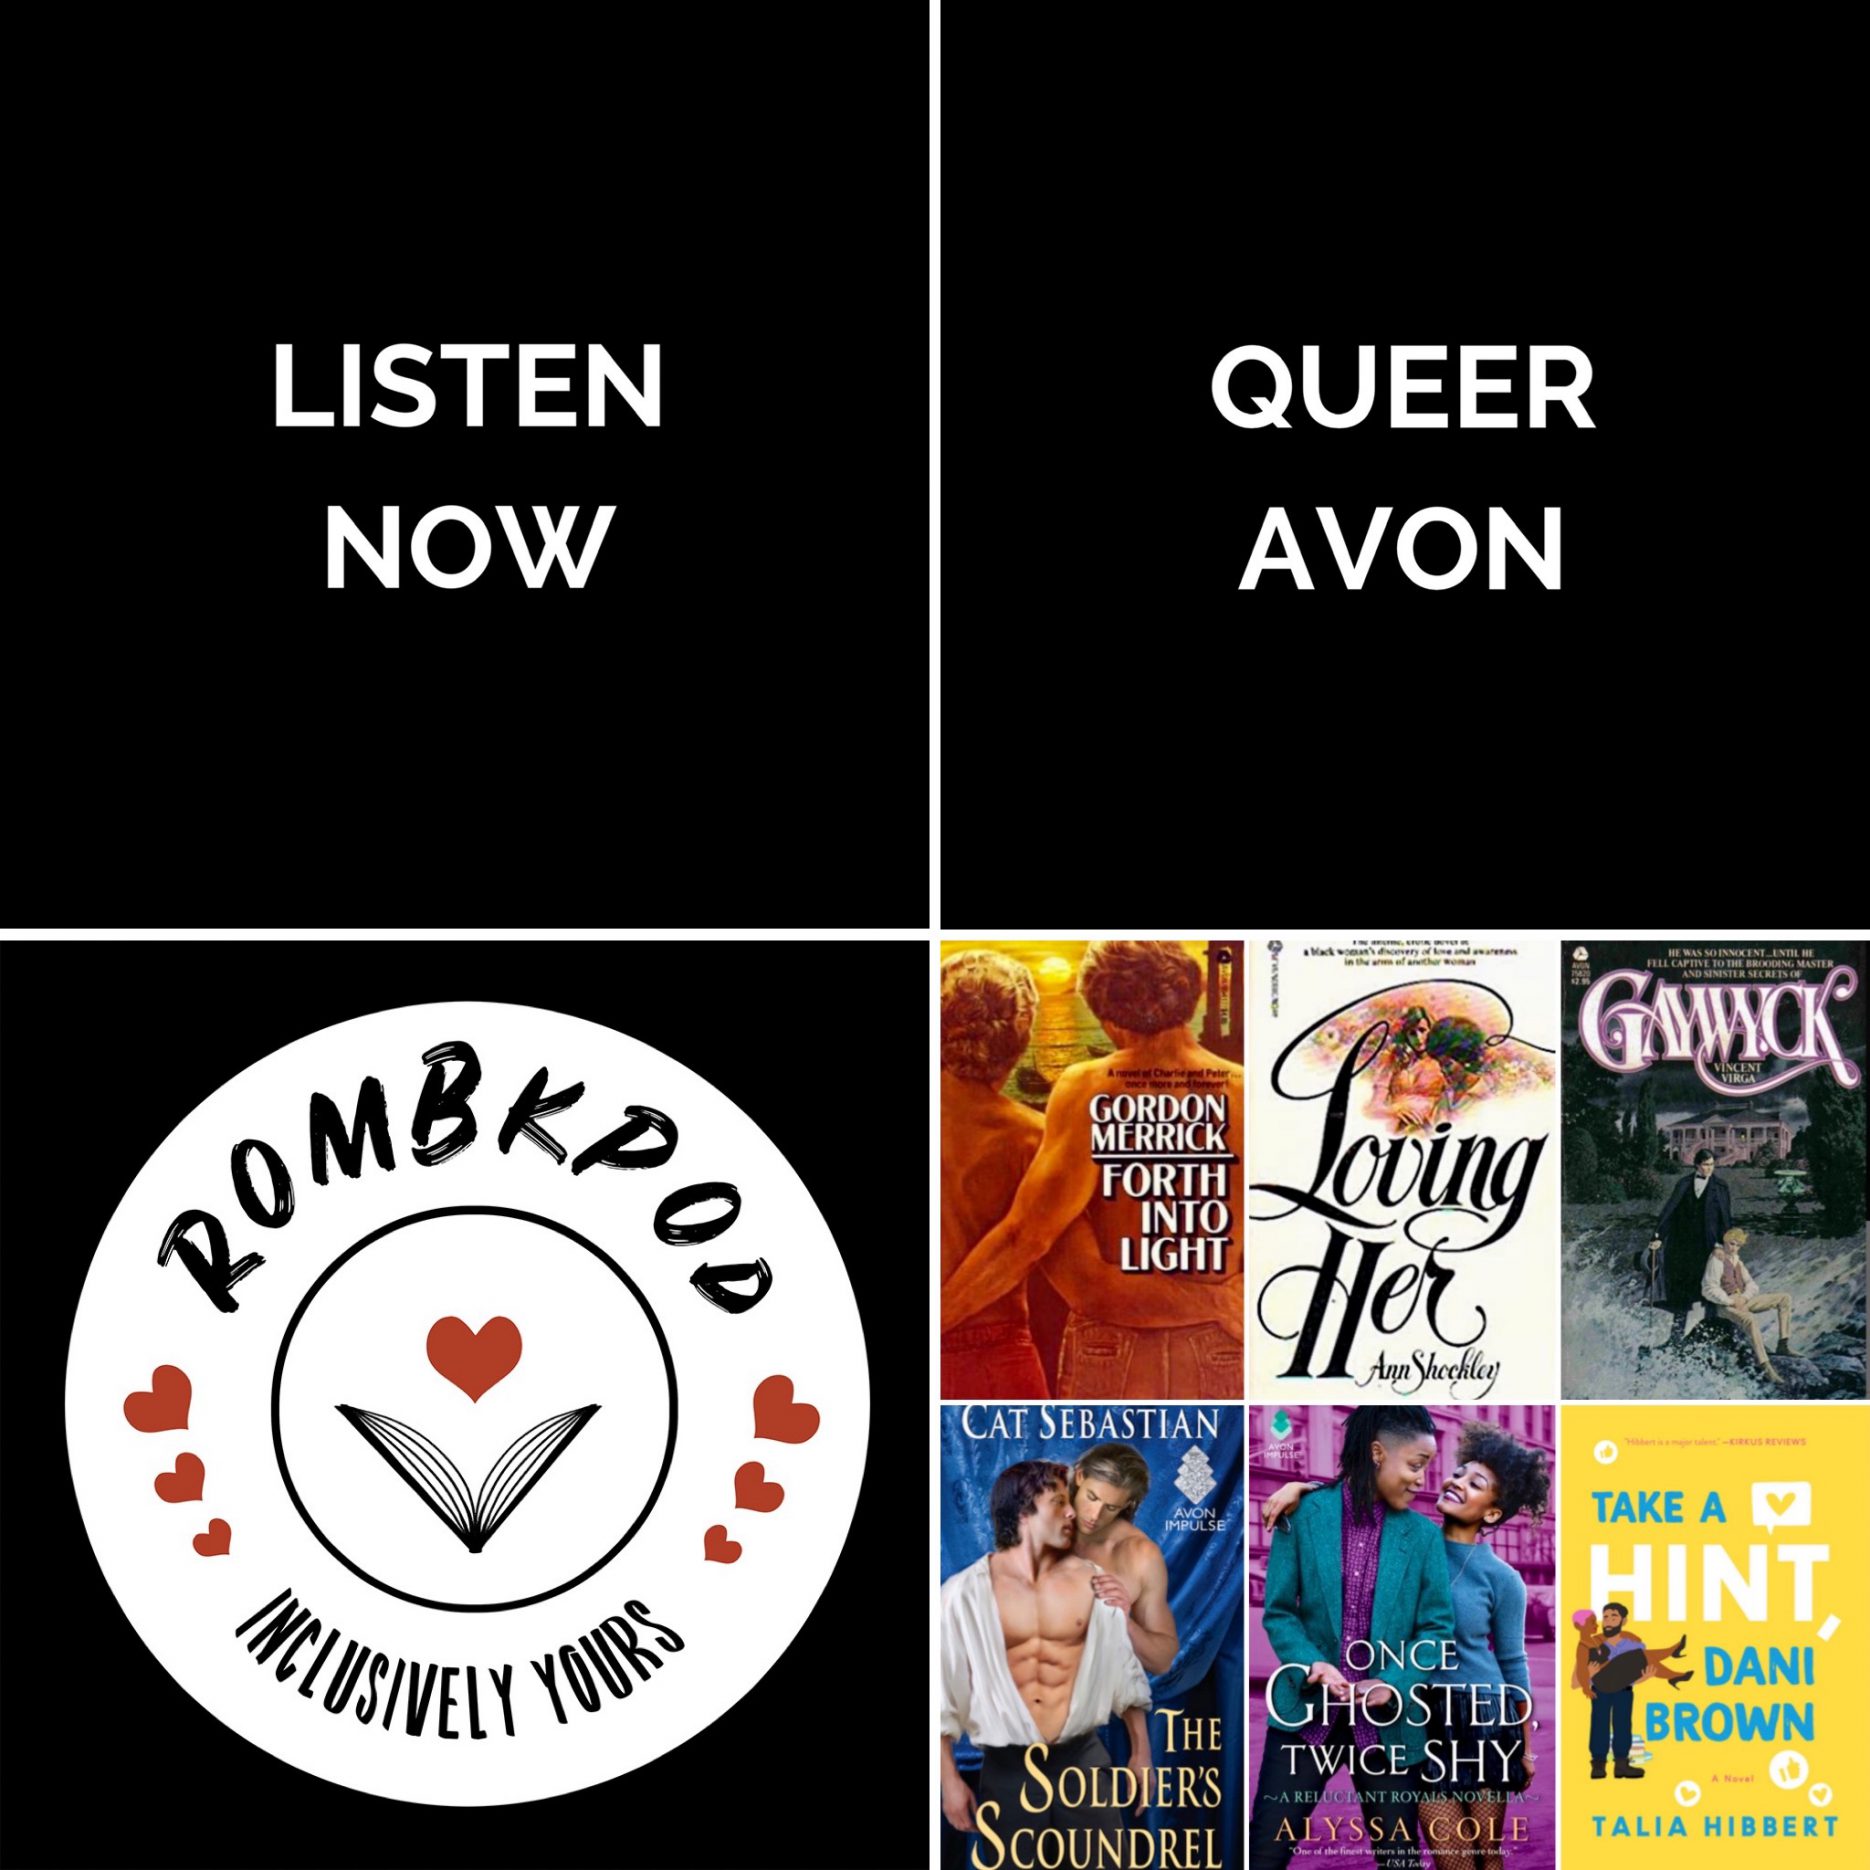 IMAGE: lower left corner, RomBkPod heart logo; lower right corner, Queer Avon book cover collage; IMAGE TEXT: Listen Now, "Queer Avon"